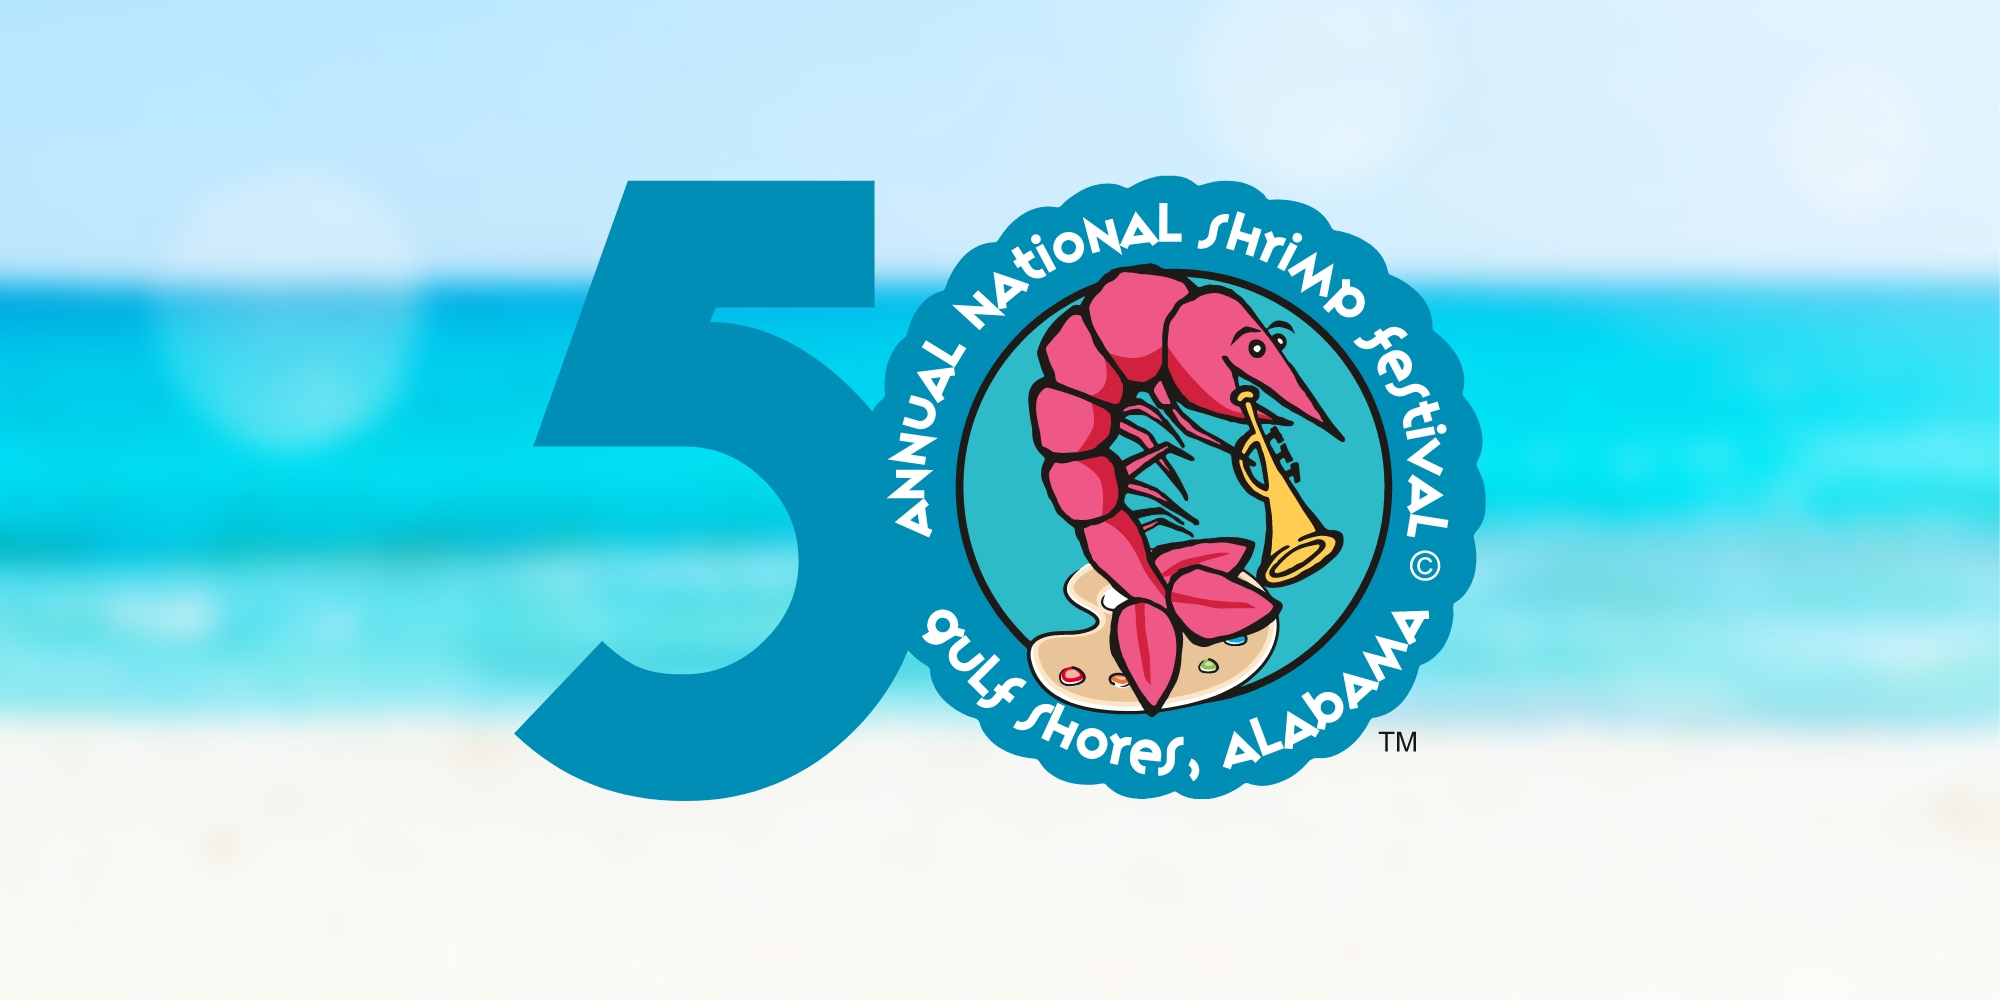 50th Annual National Shrimp Festival cover image